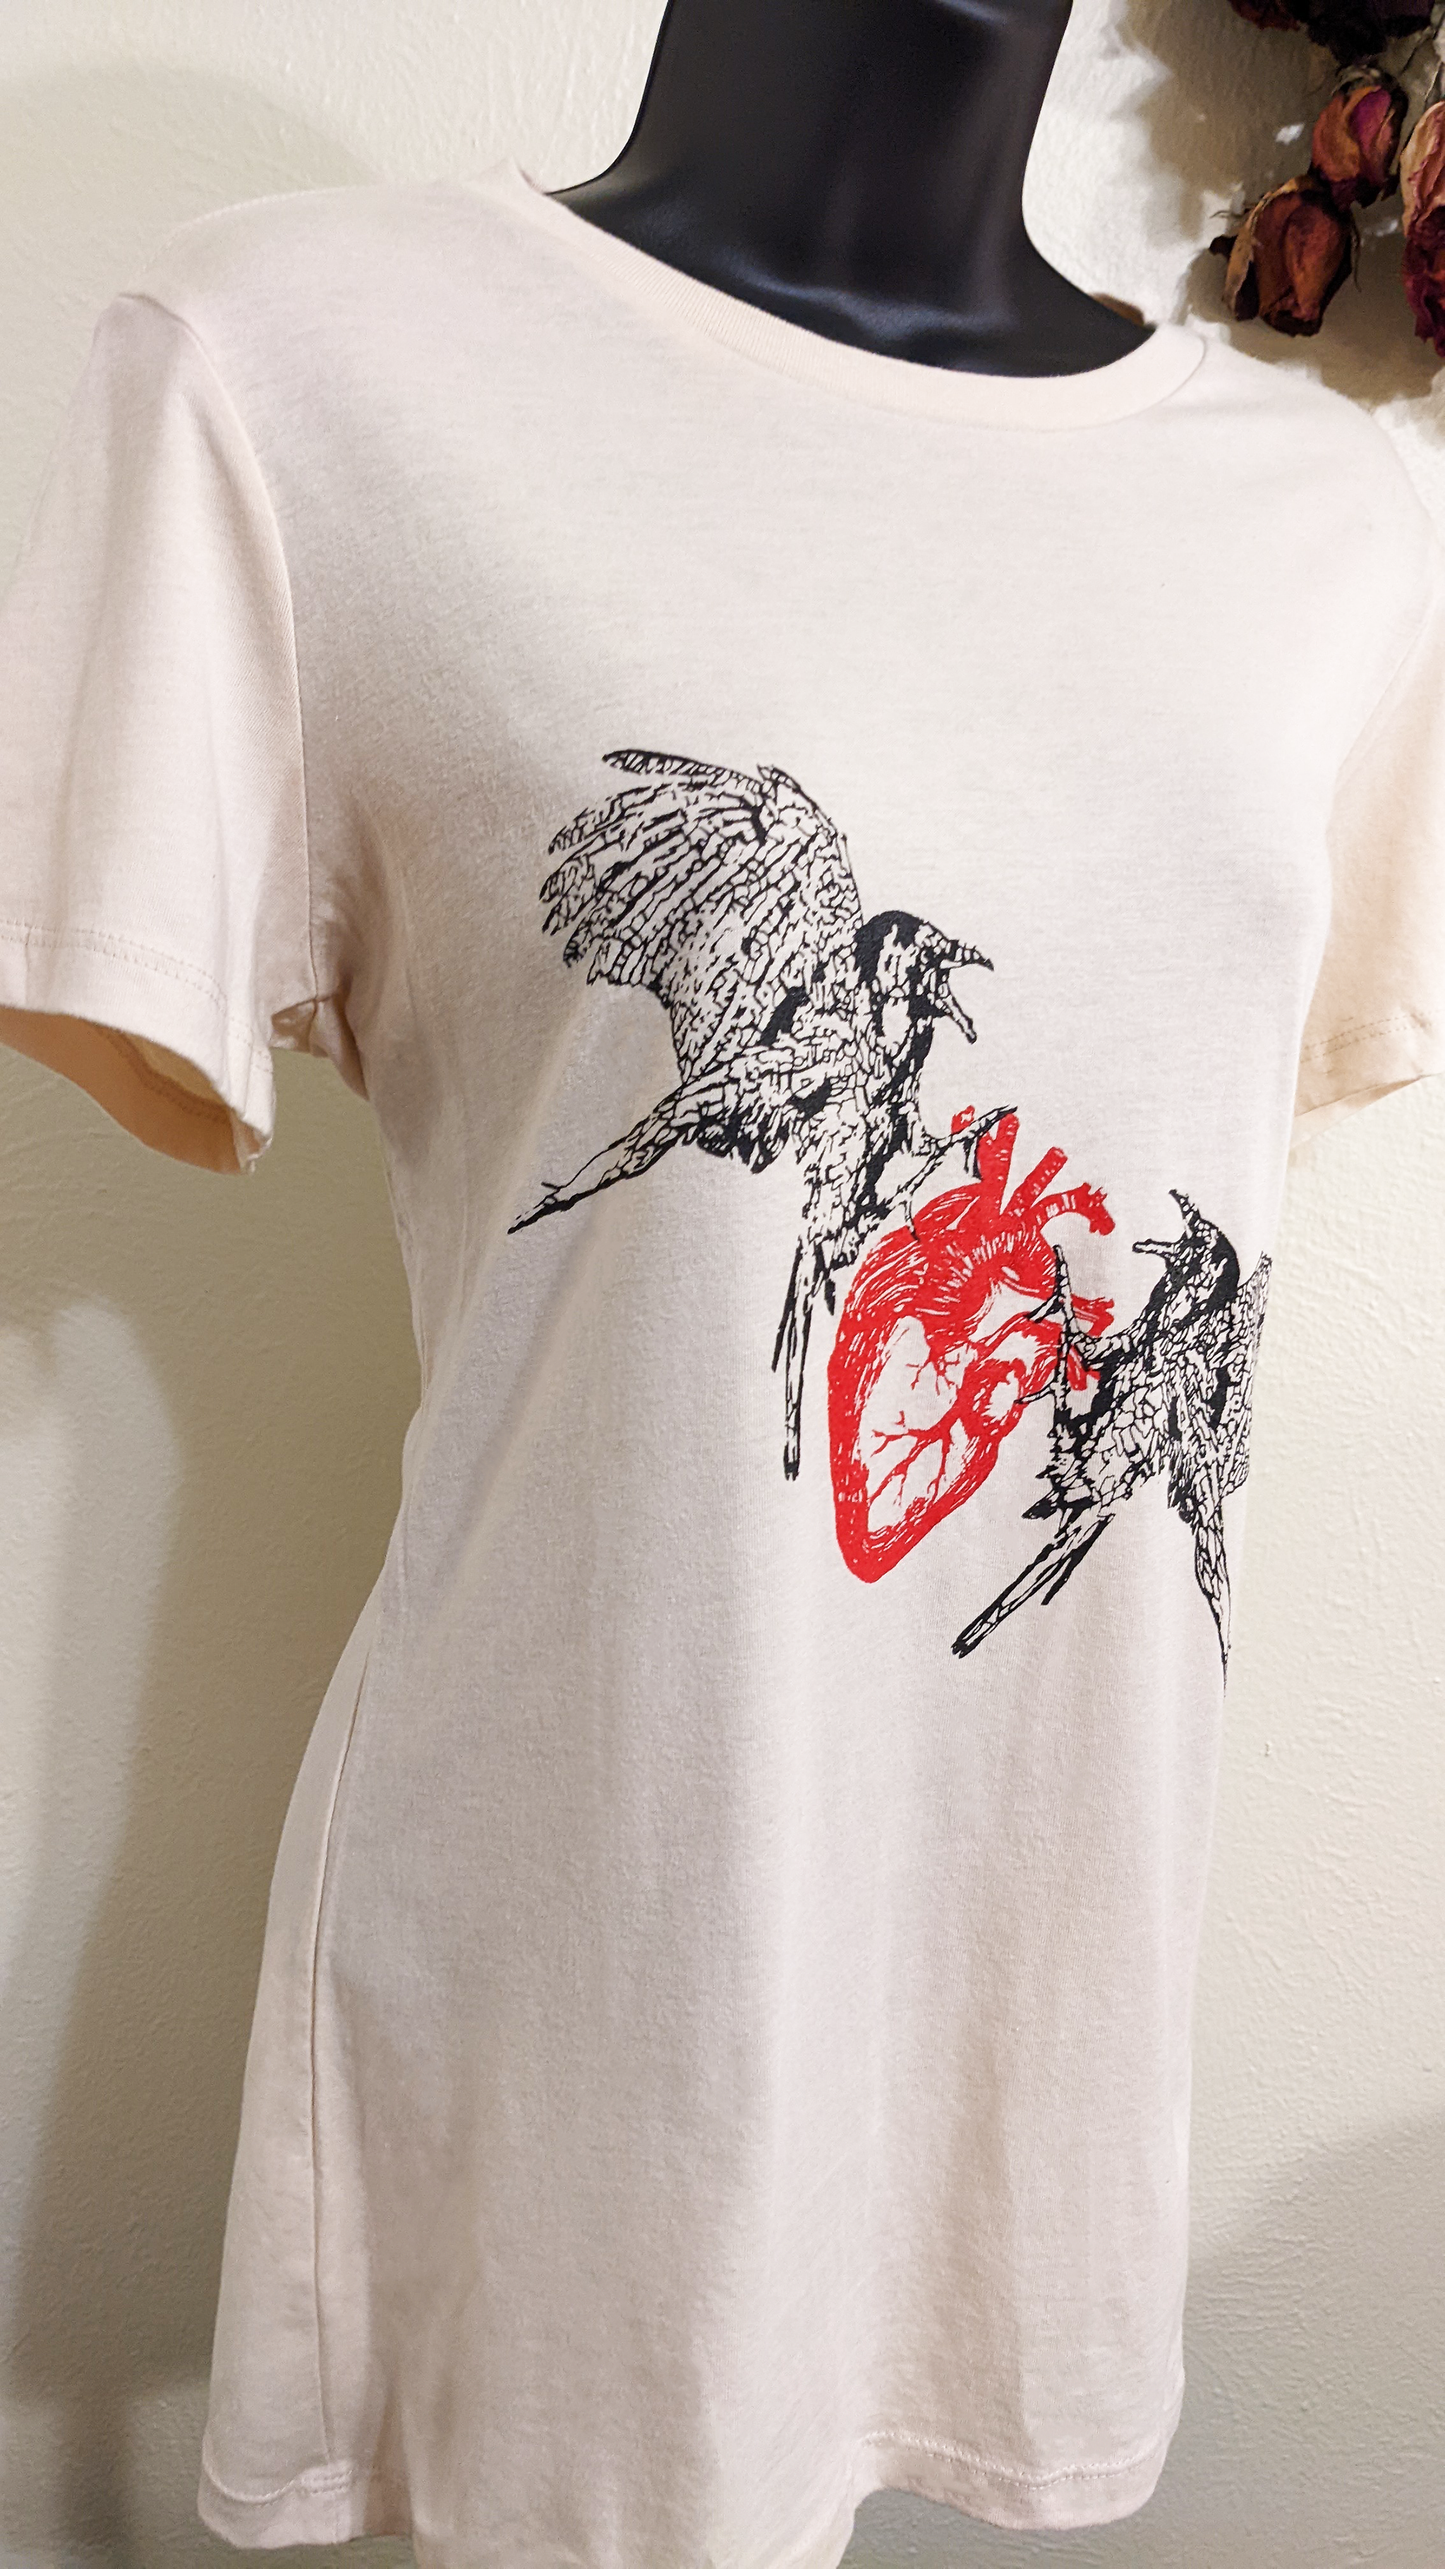 Two Crows And A Heart - Women's Cut Bone White T -Shirt